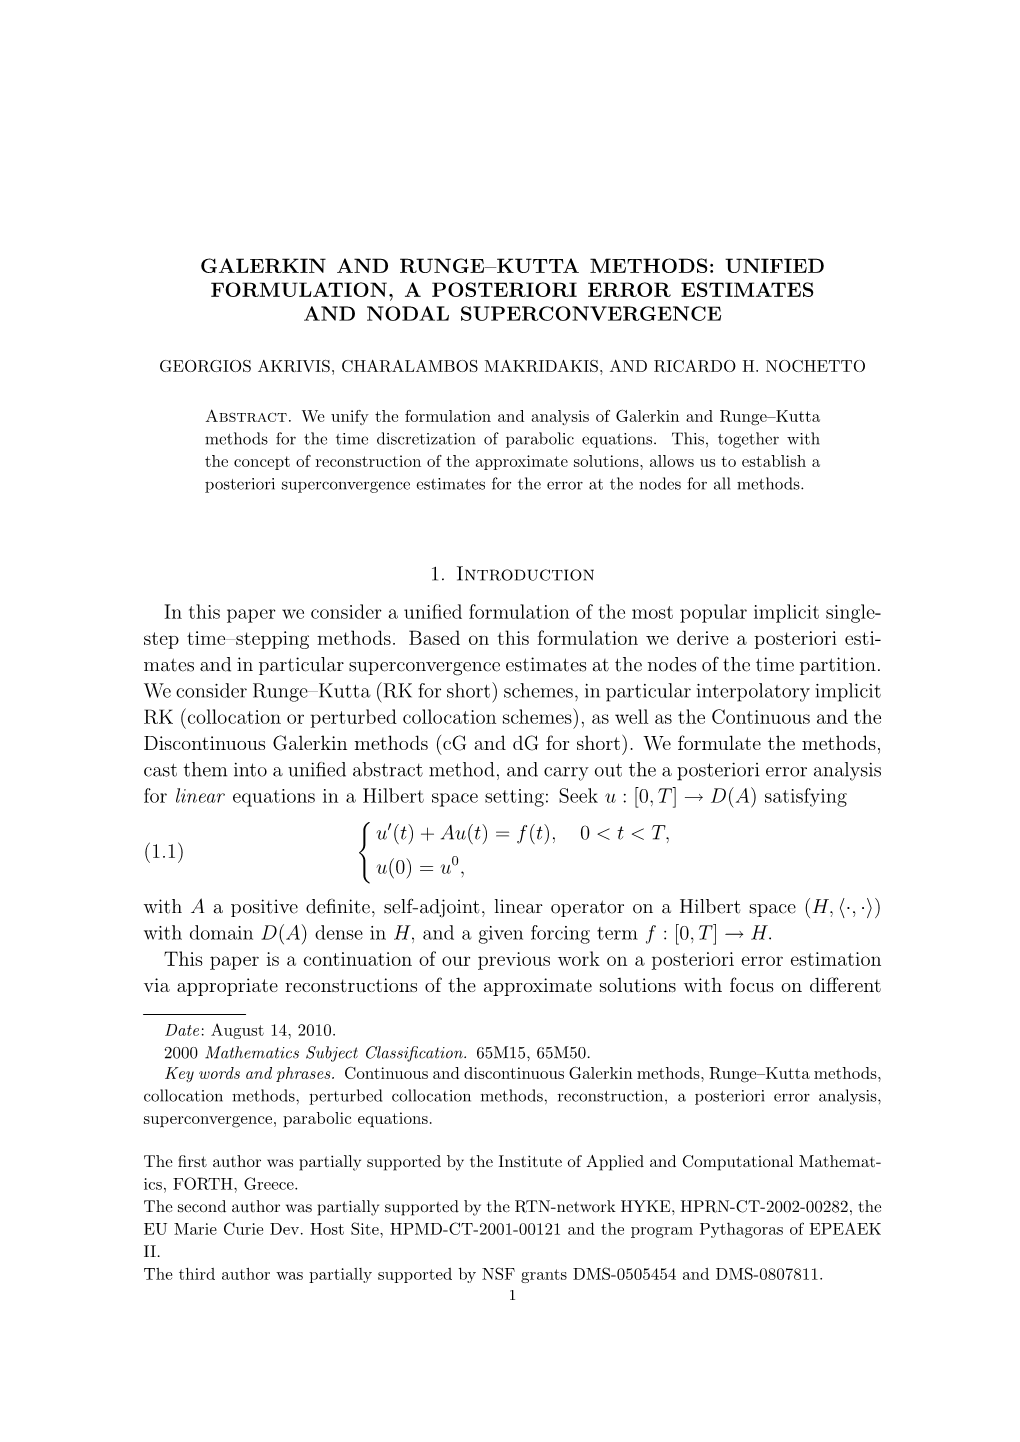 Galerkin and Runge–Kutta Methods: Unified Formulation, a Posteriori Error Estimates and Nodal Superconvergence